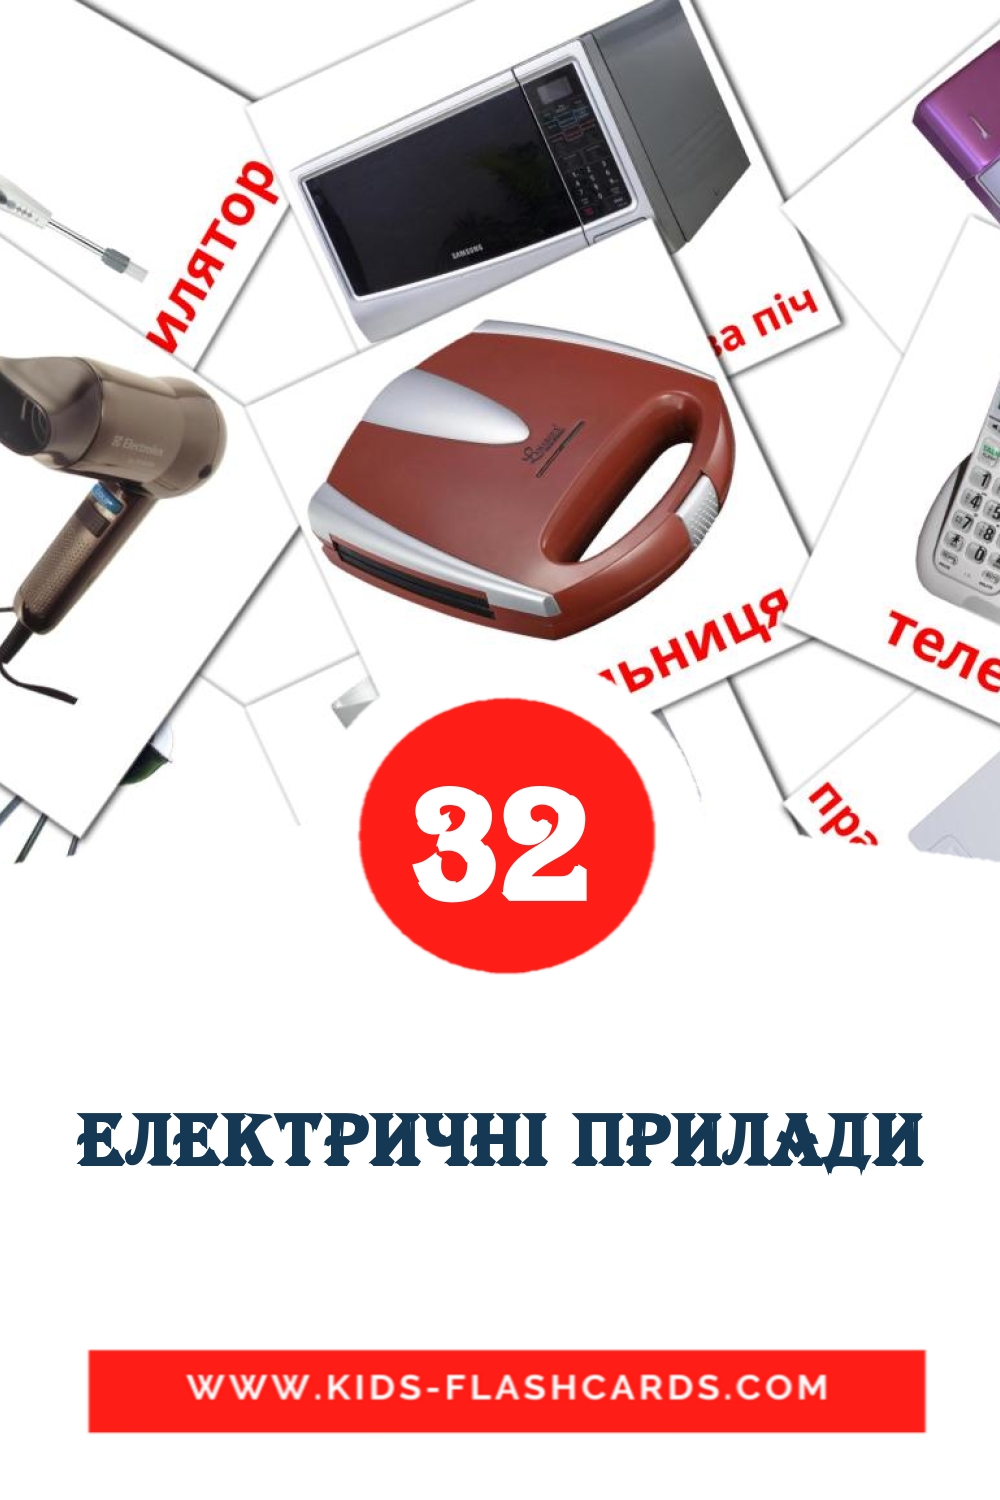 Електричні прилади на украинском для Детского Сада (32 карточки)